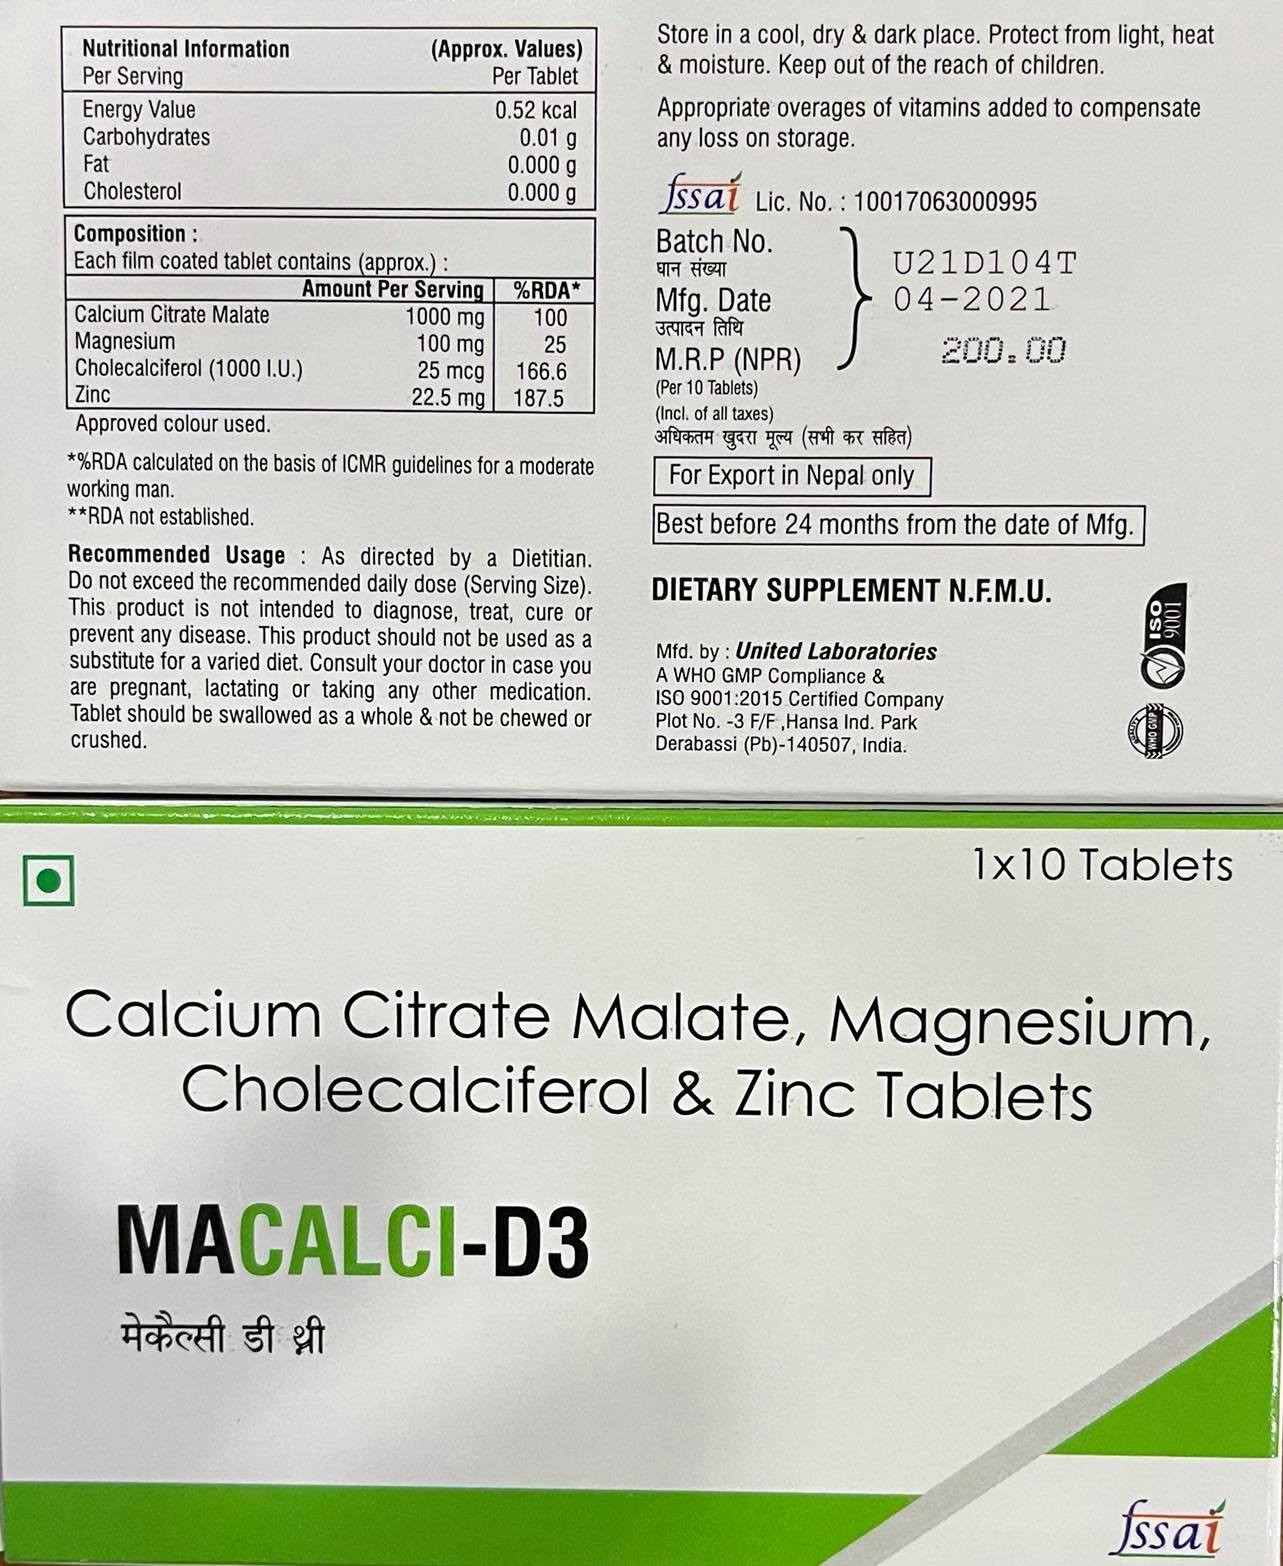 Macalci-d3 Tablet